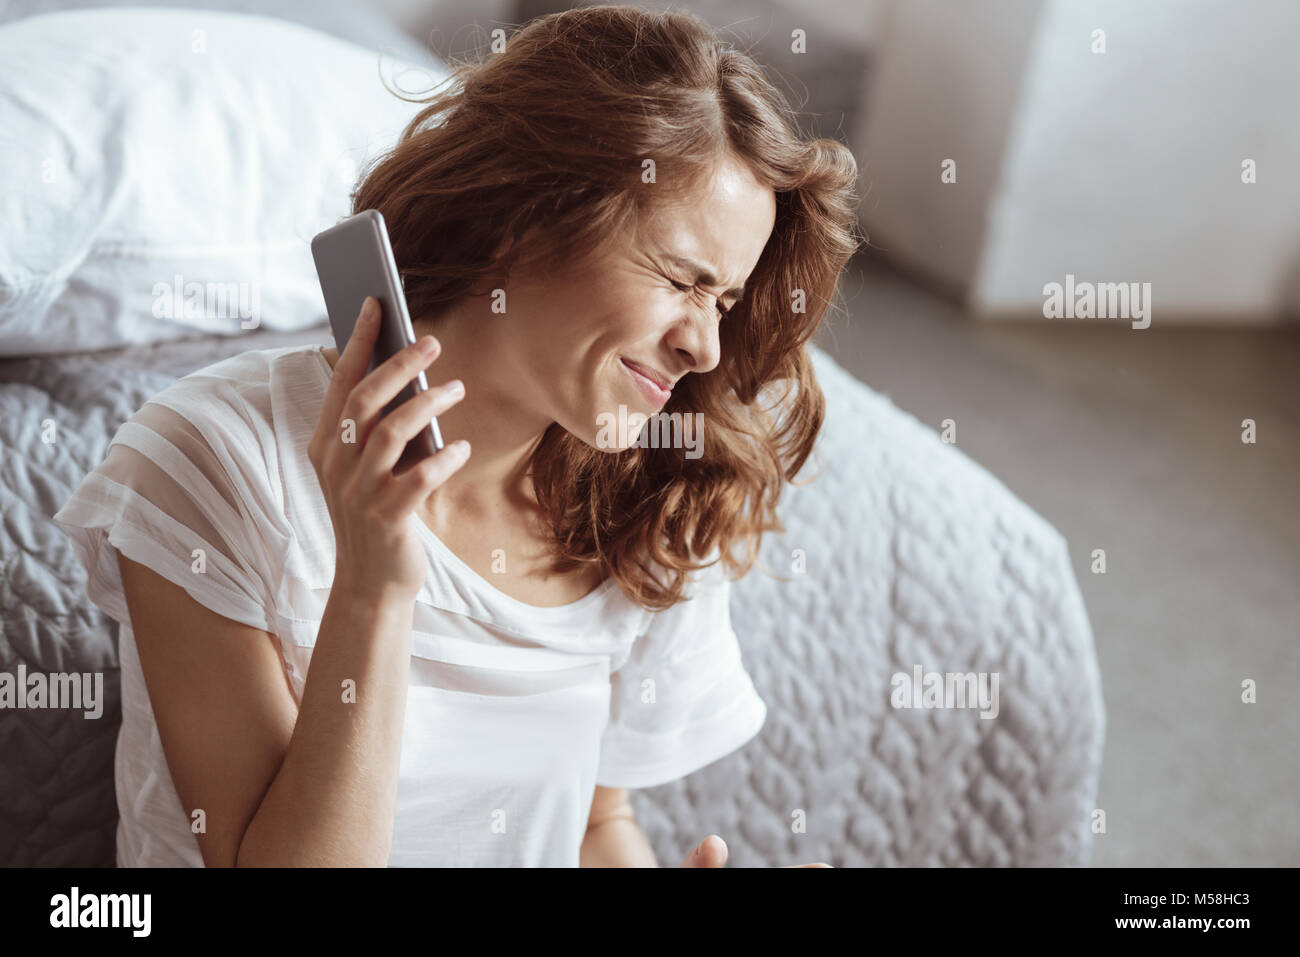 Irritated woman refusing to listen her partner on phone Stock Photo